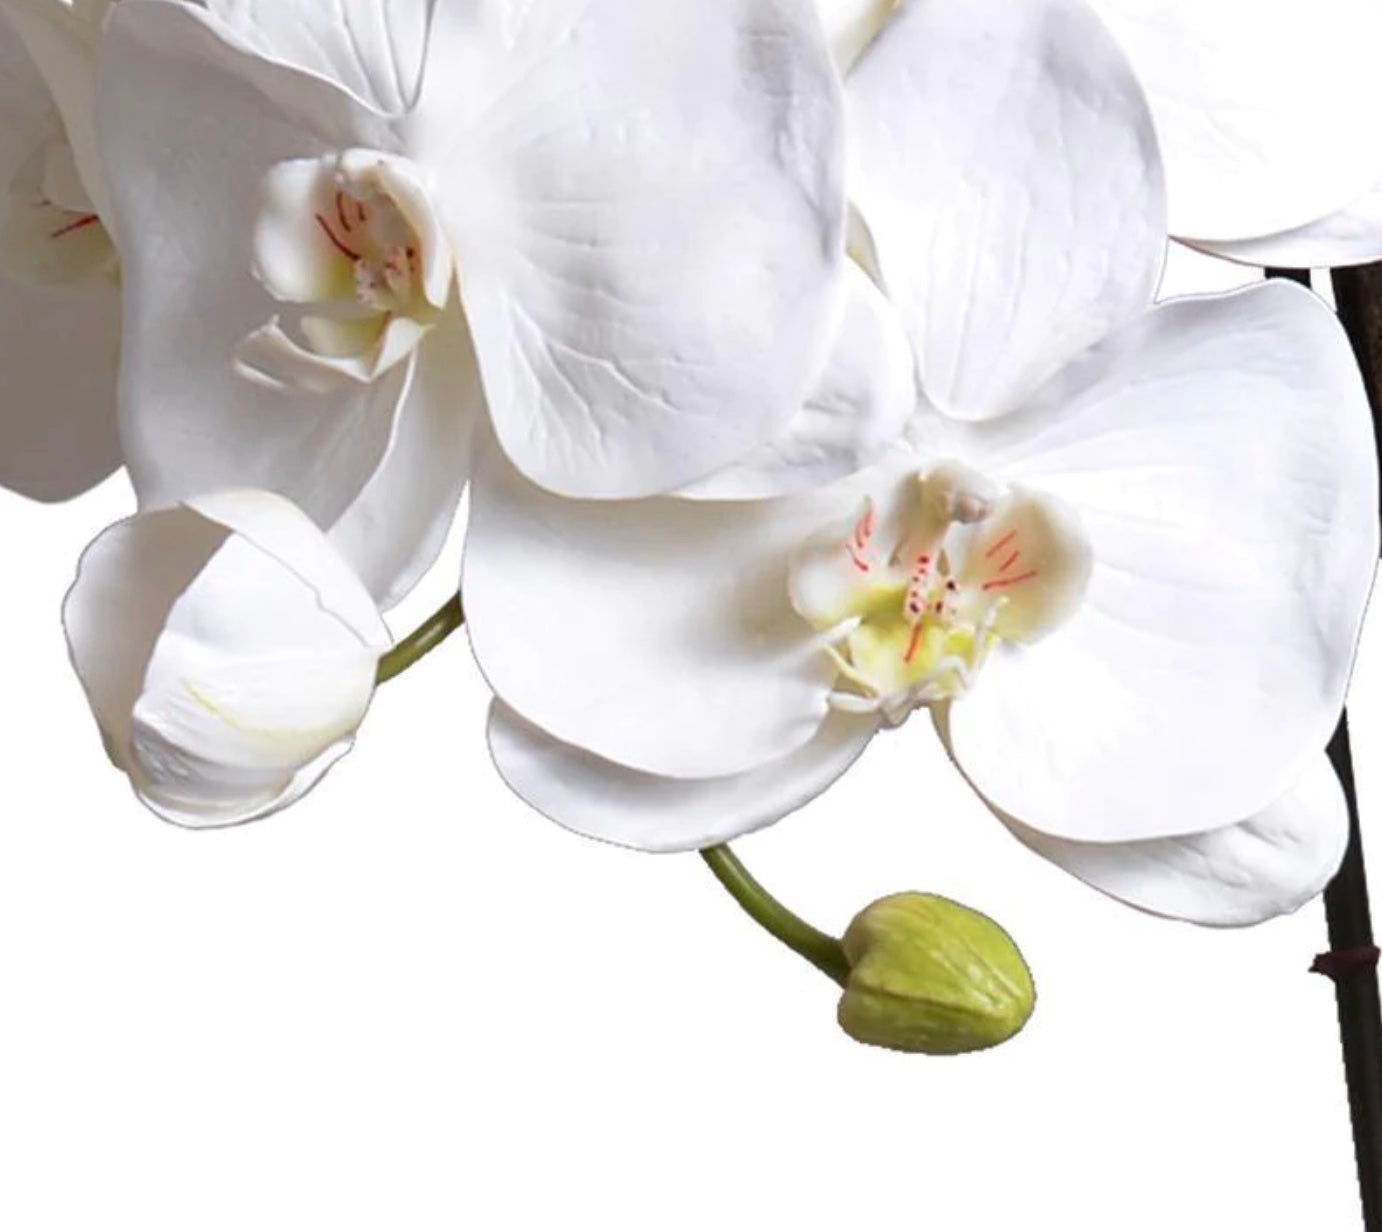 Orchid x5 in Ceramic Vase - White